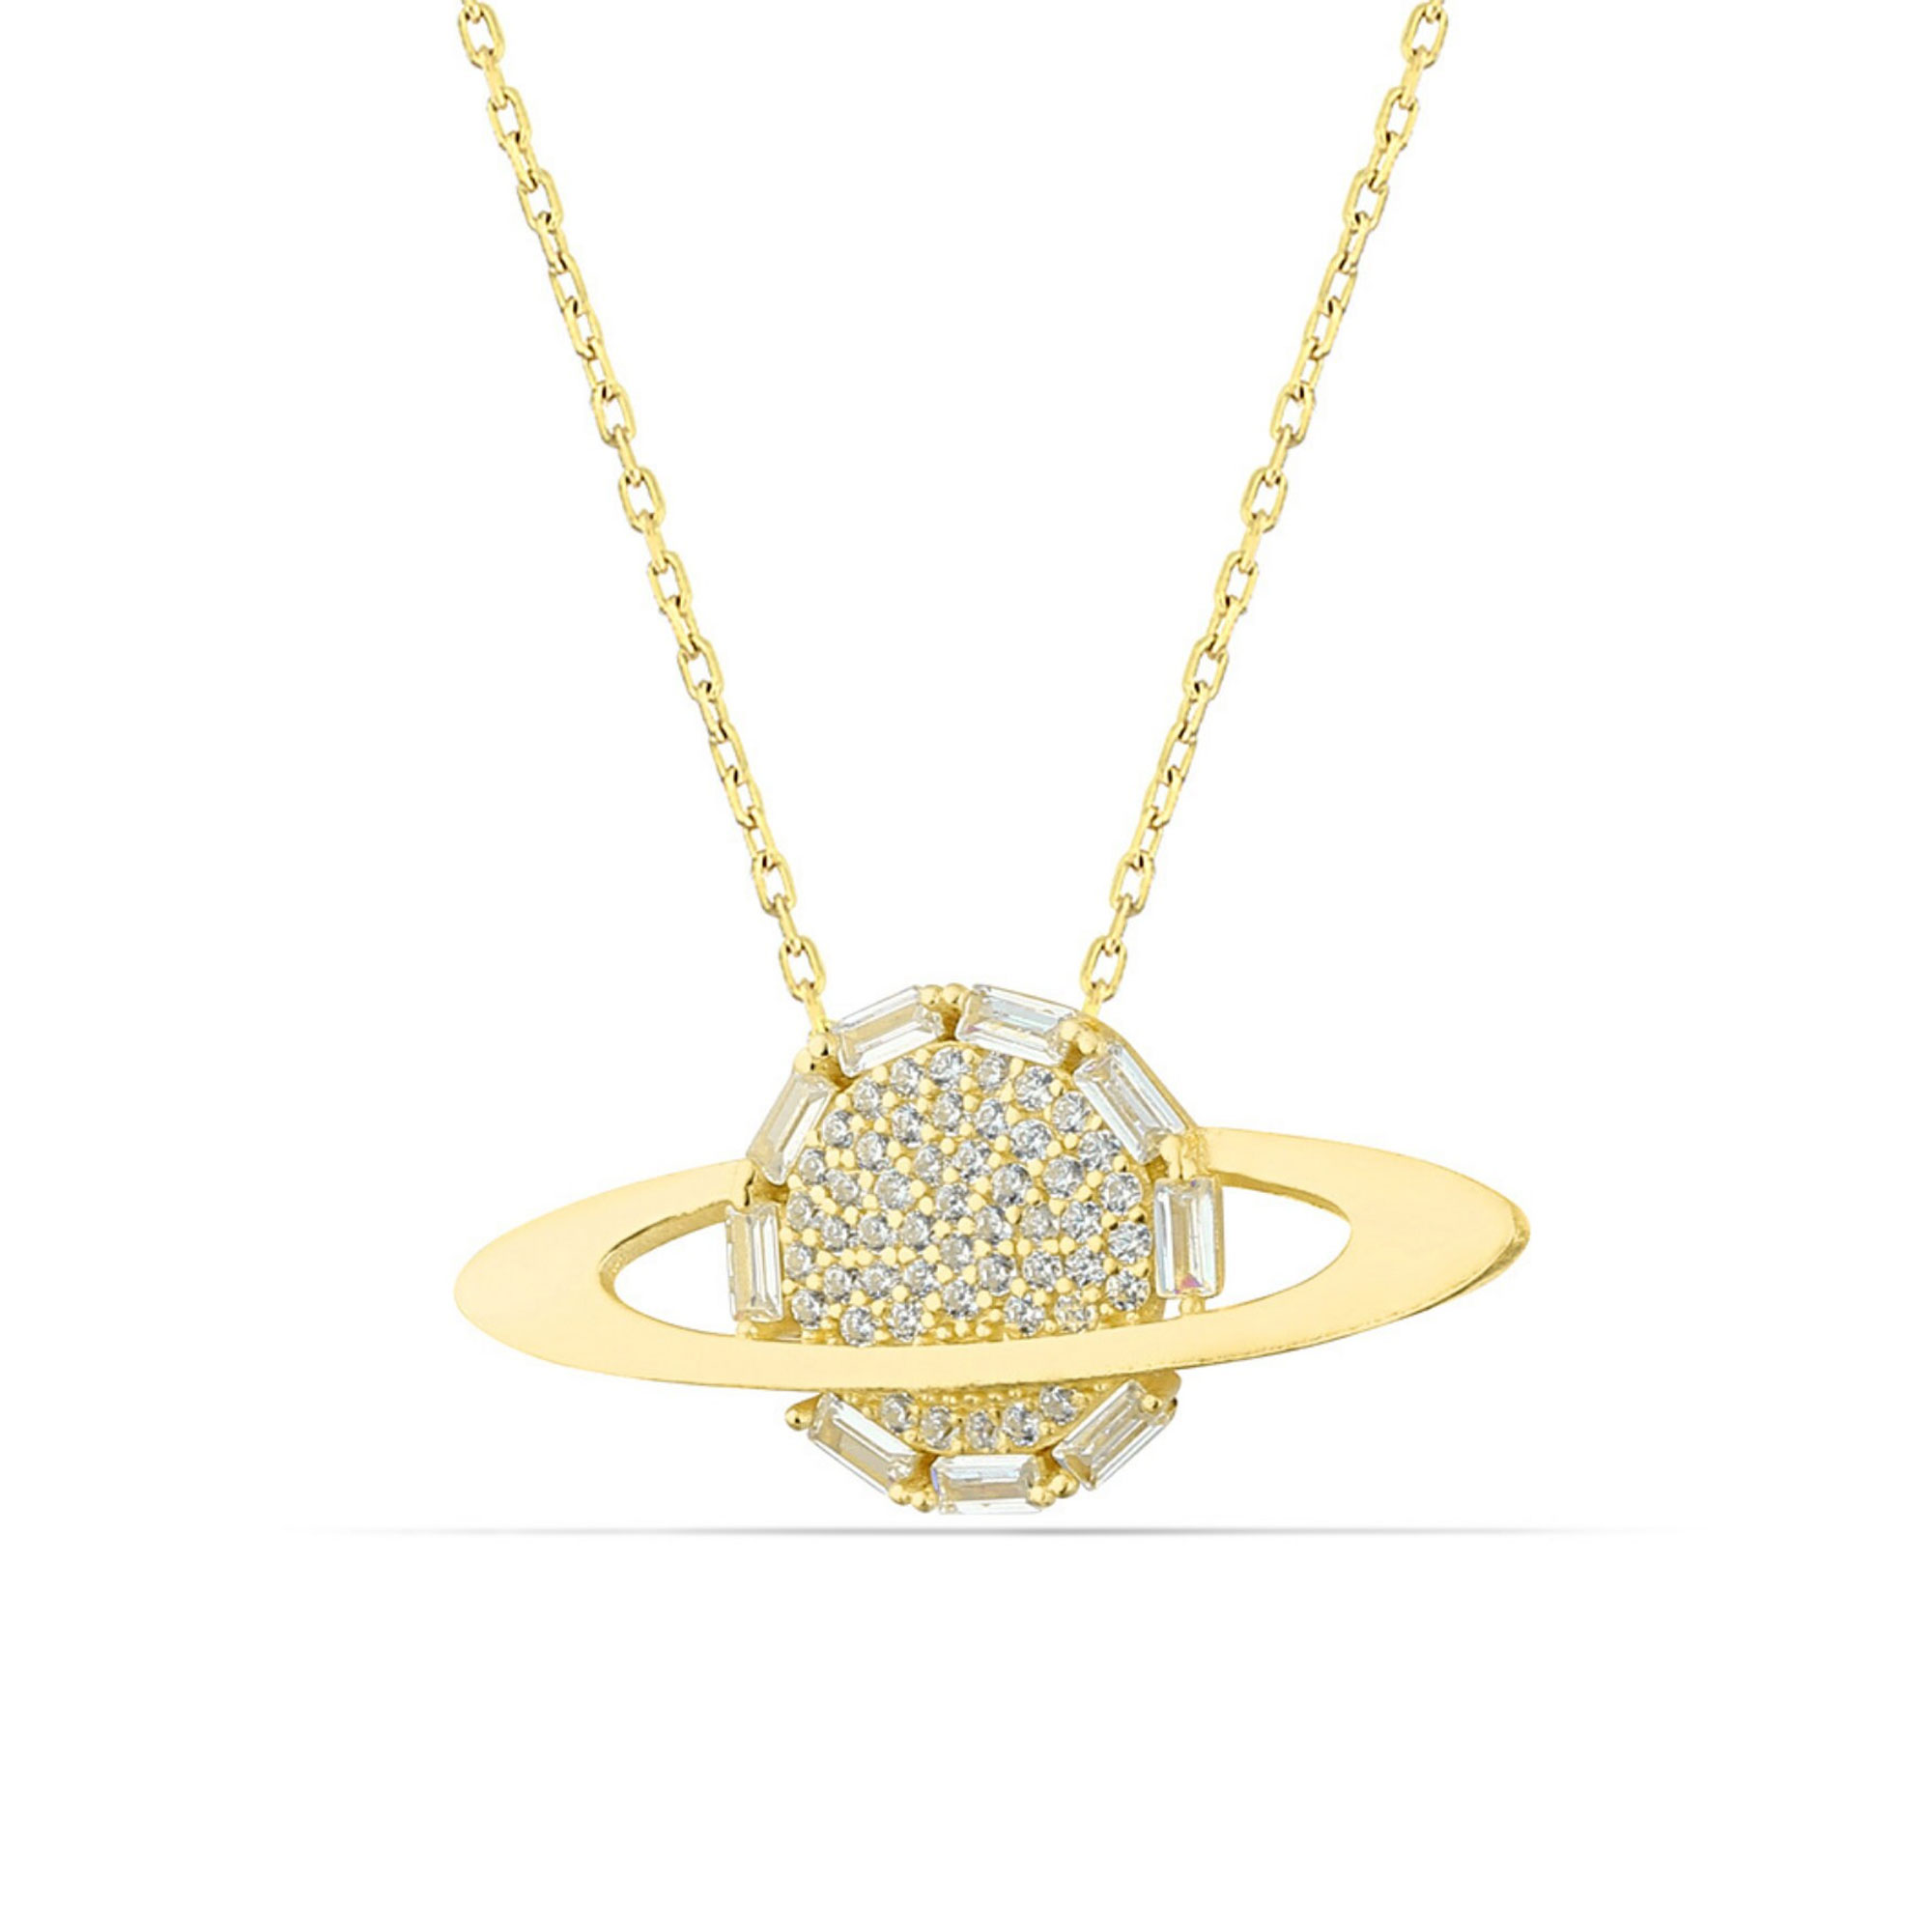 Vintage 22ct Gold Planet Necklace with Black Diamond Beads - felt